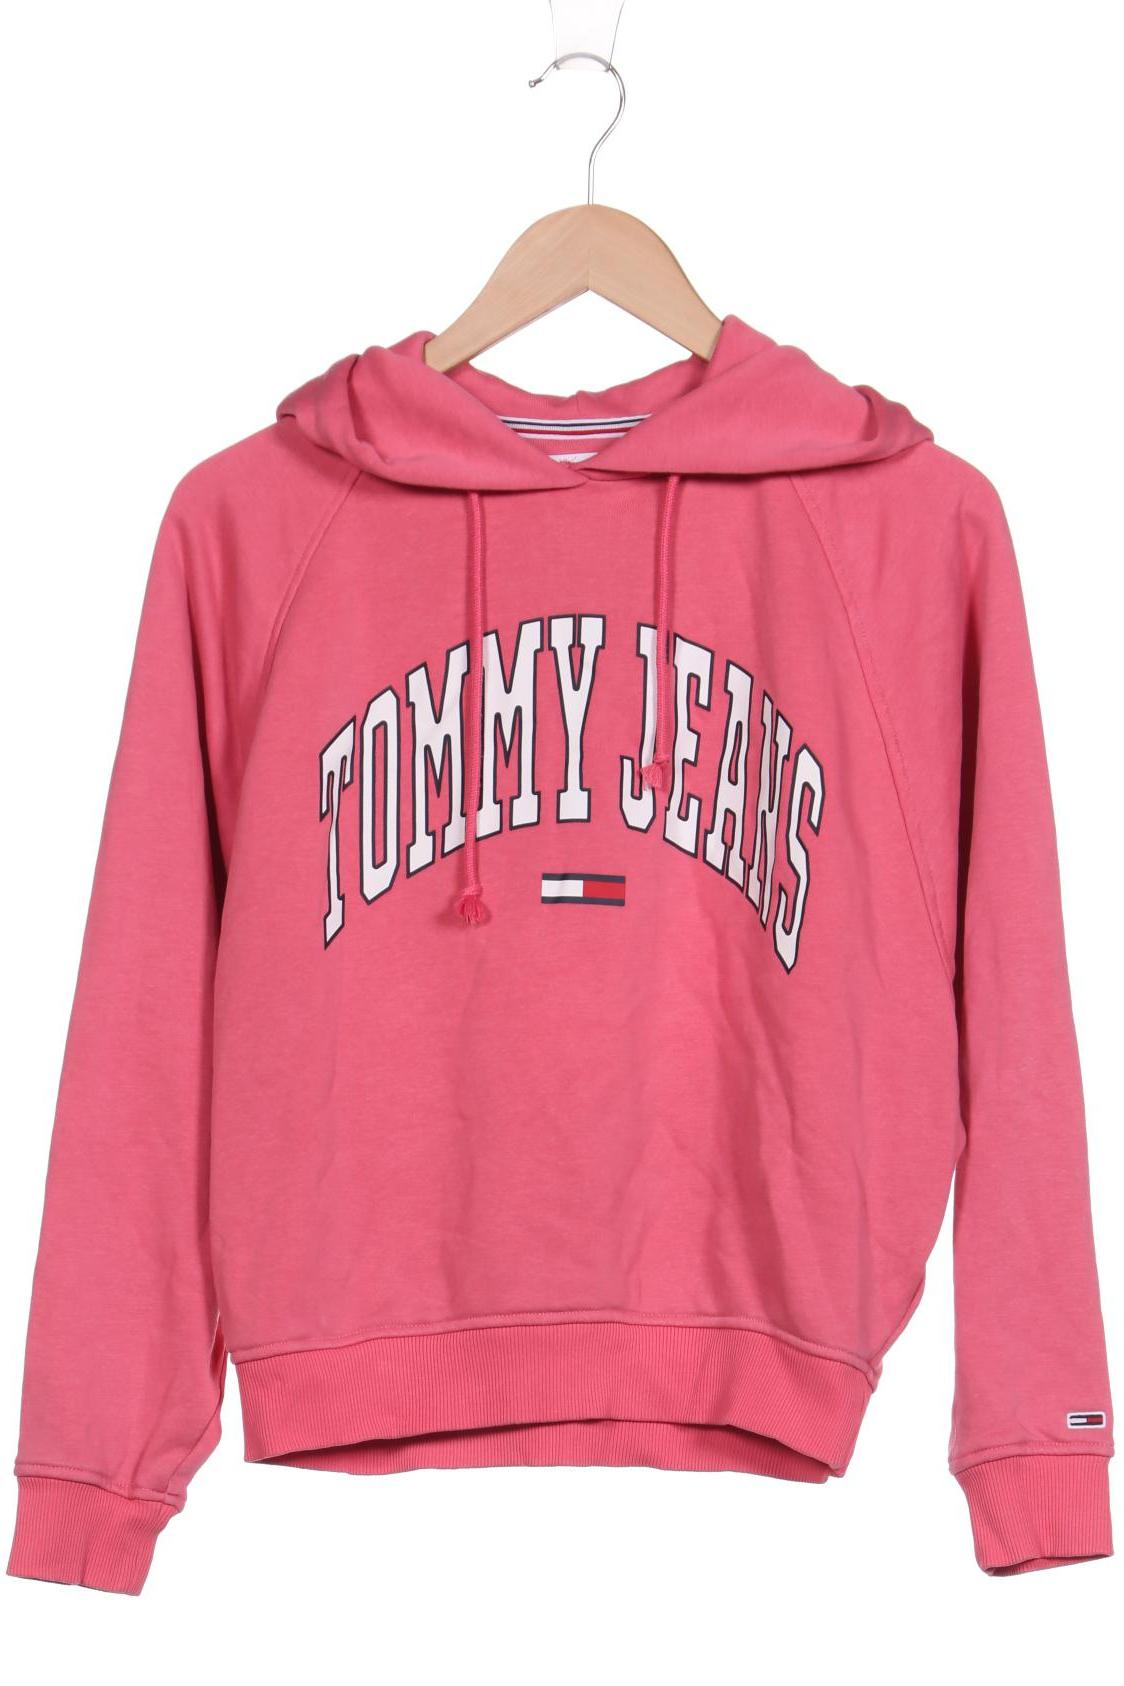 Tommy Jeans Damen Kapuzenpullover, pink von Tommy Jeans